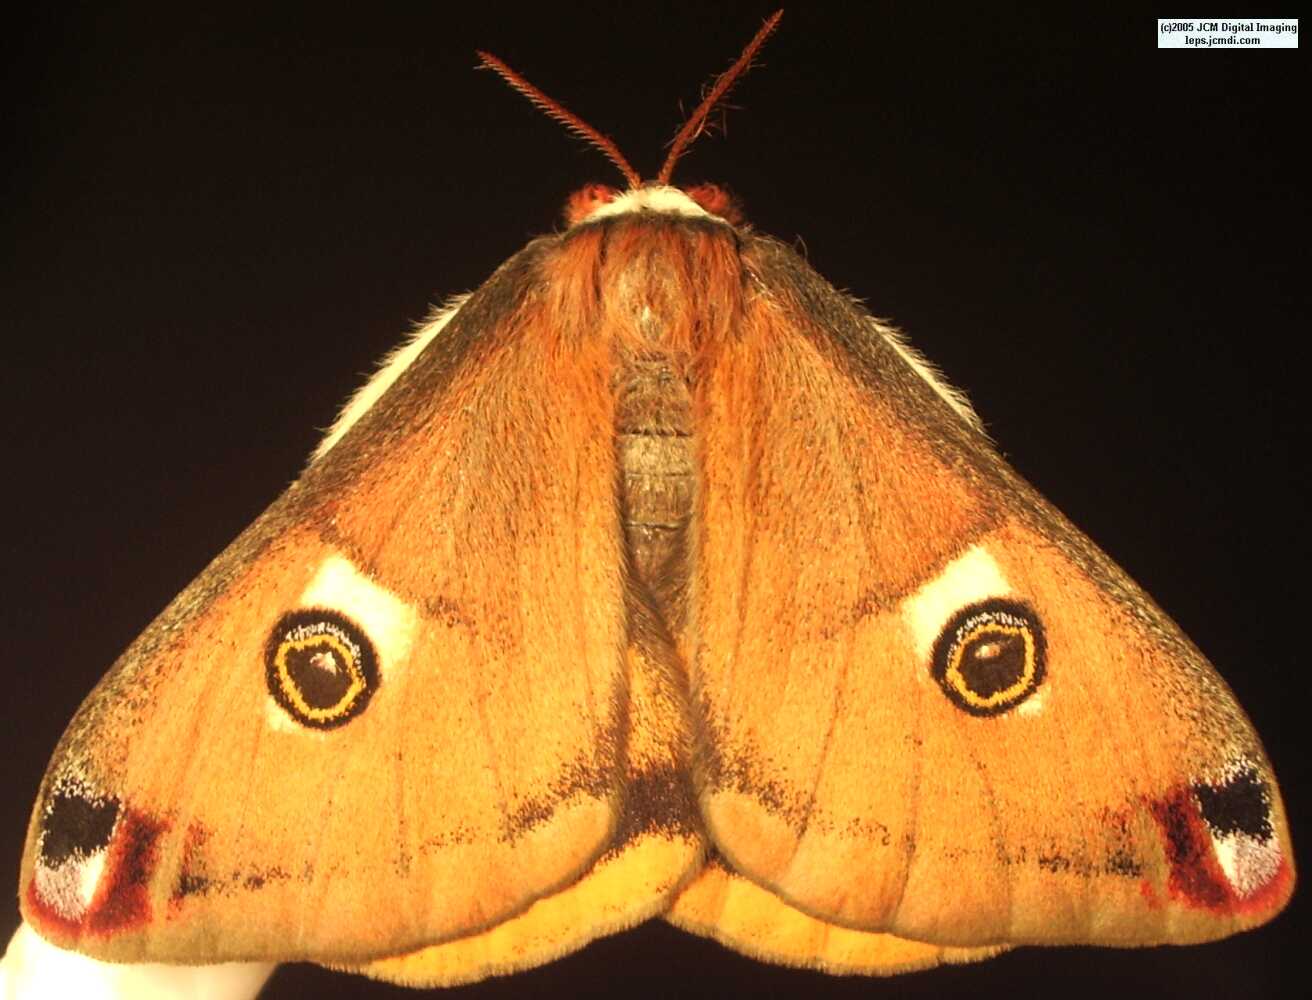 Saturnia mendocino (Mendocino Silk Moth) photos and rearing documentary JCMDI.COM